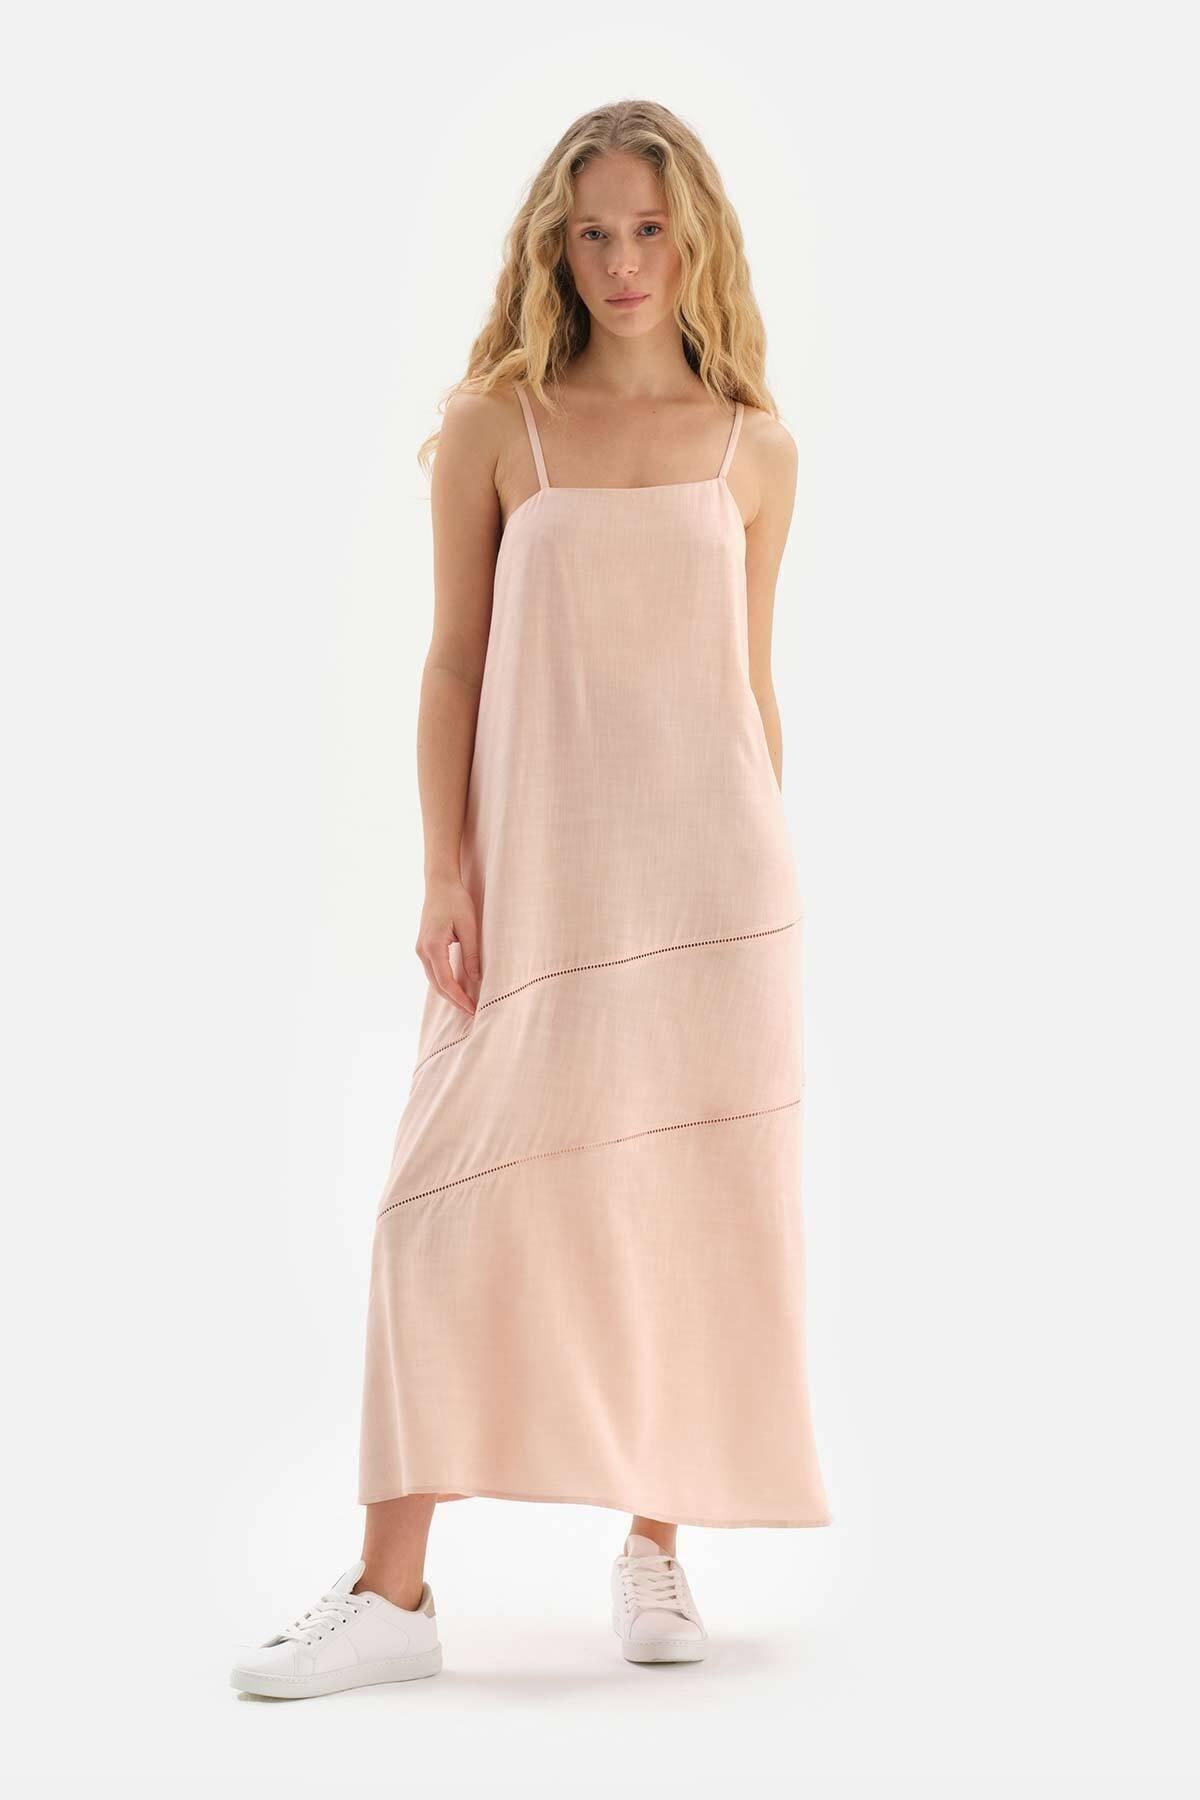 Dagi - Pink Openwork Woven Dress